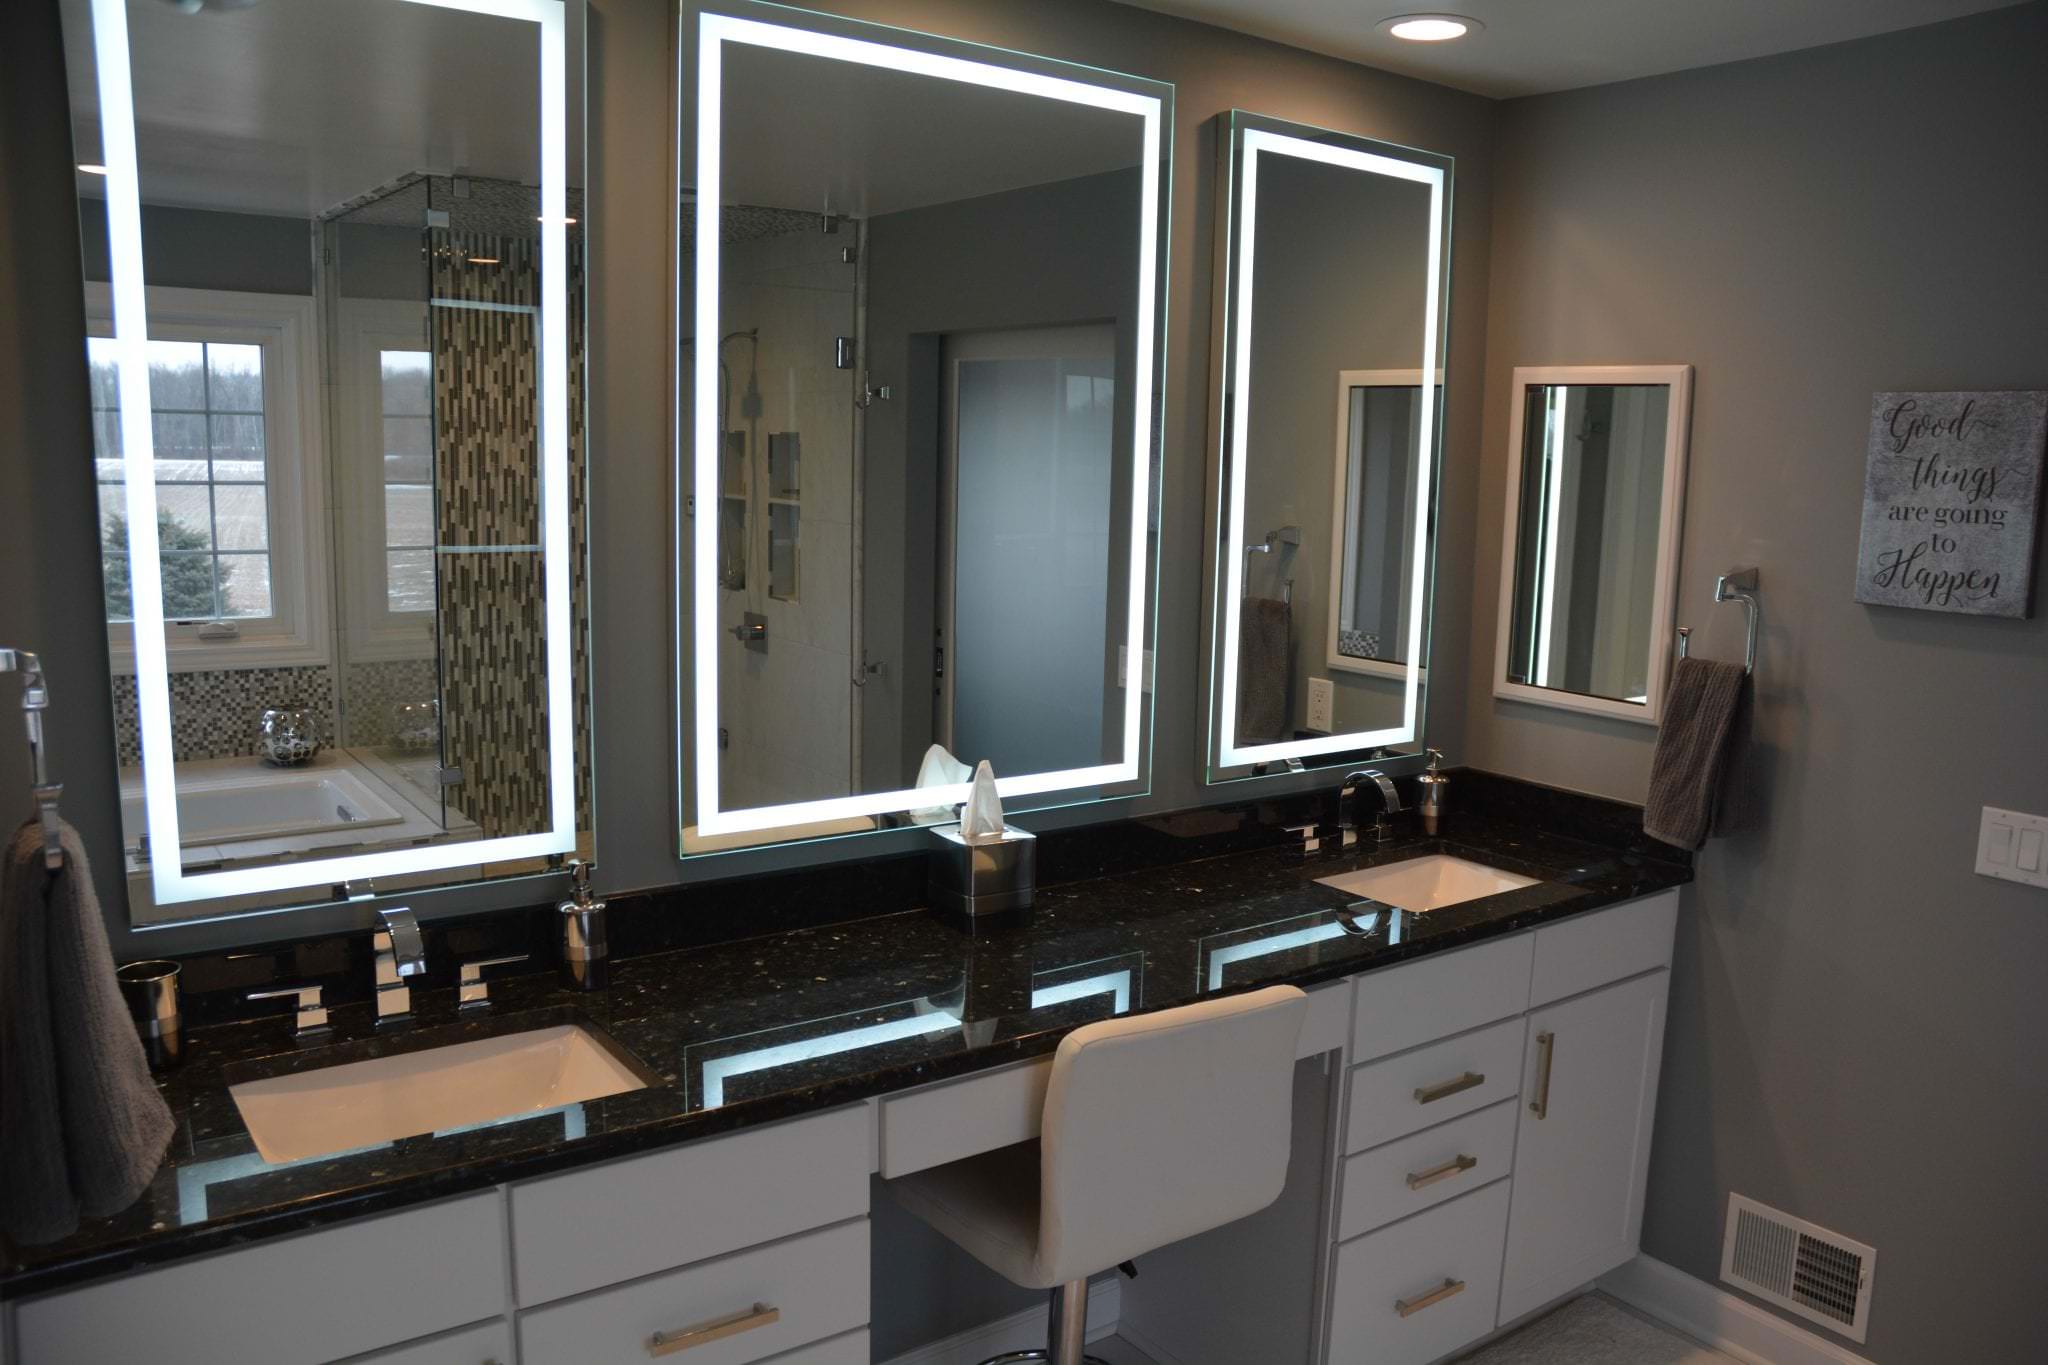 Local Kitchen Bathroom Design Remodeling Services Lansing Pa